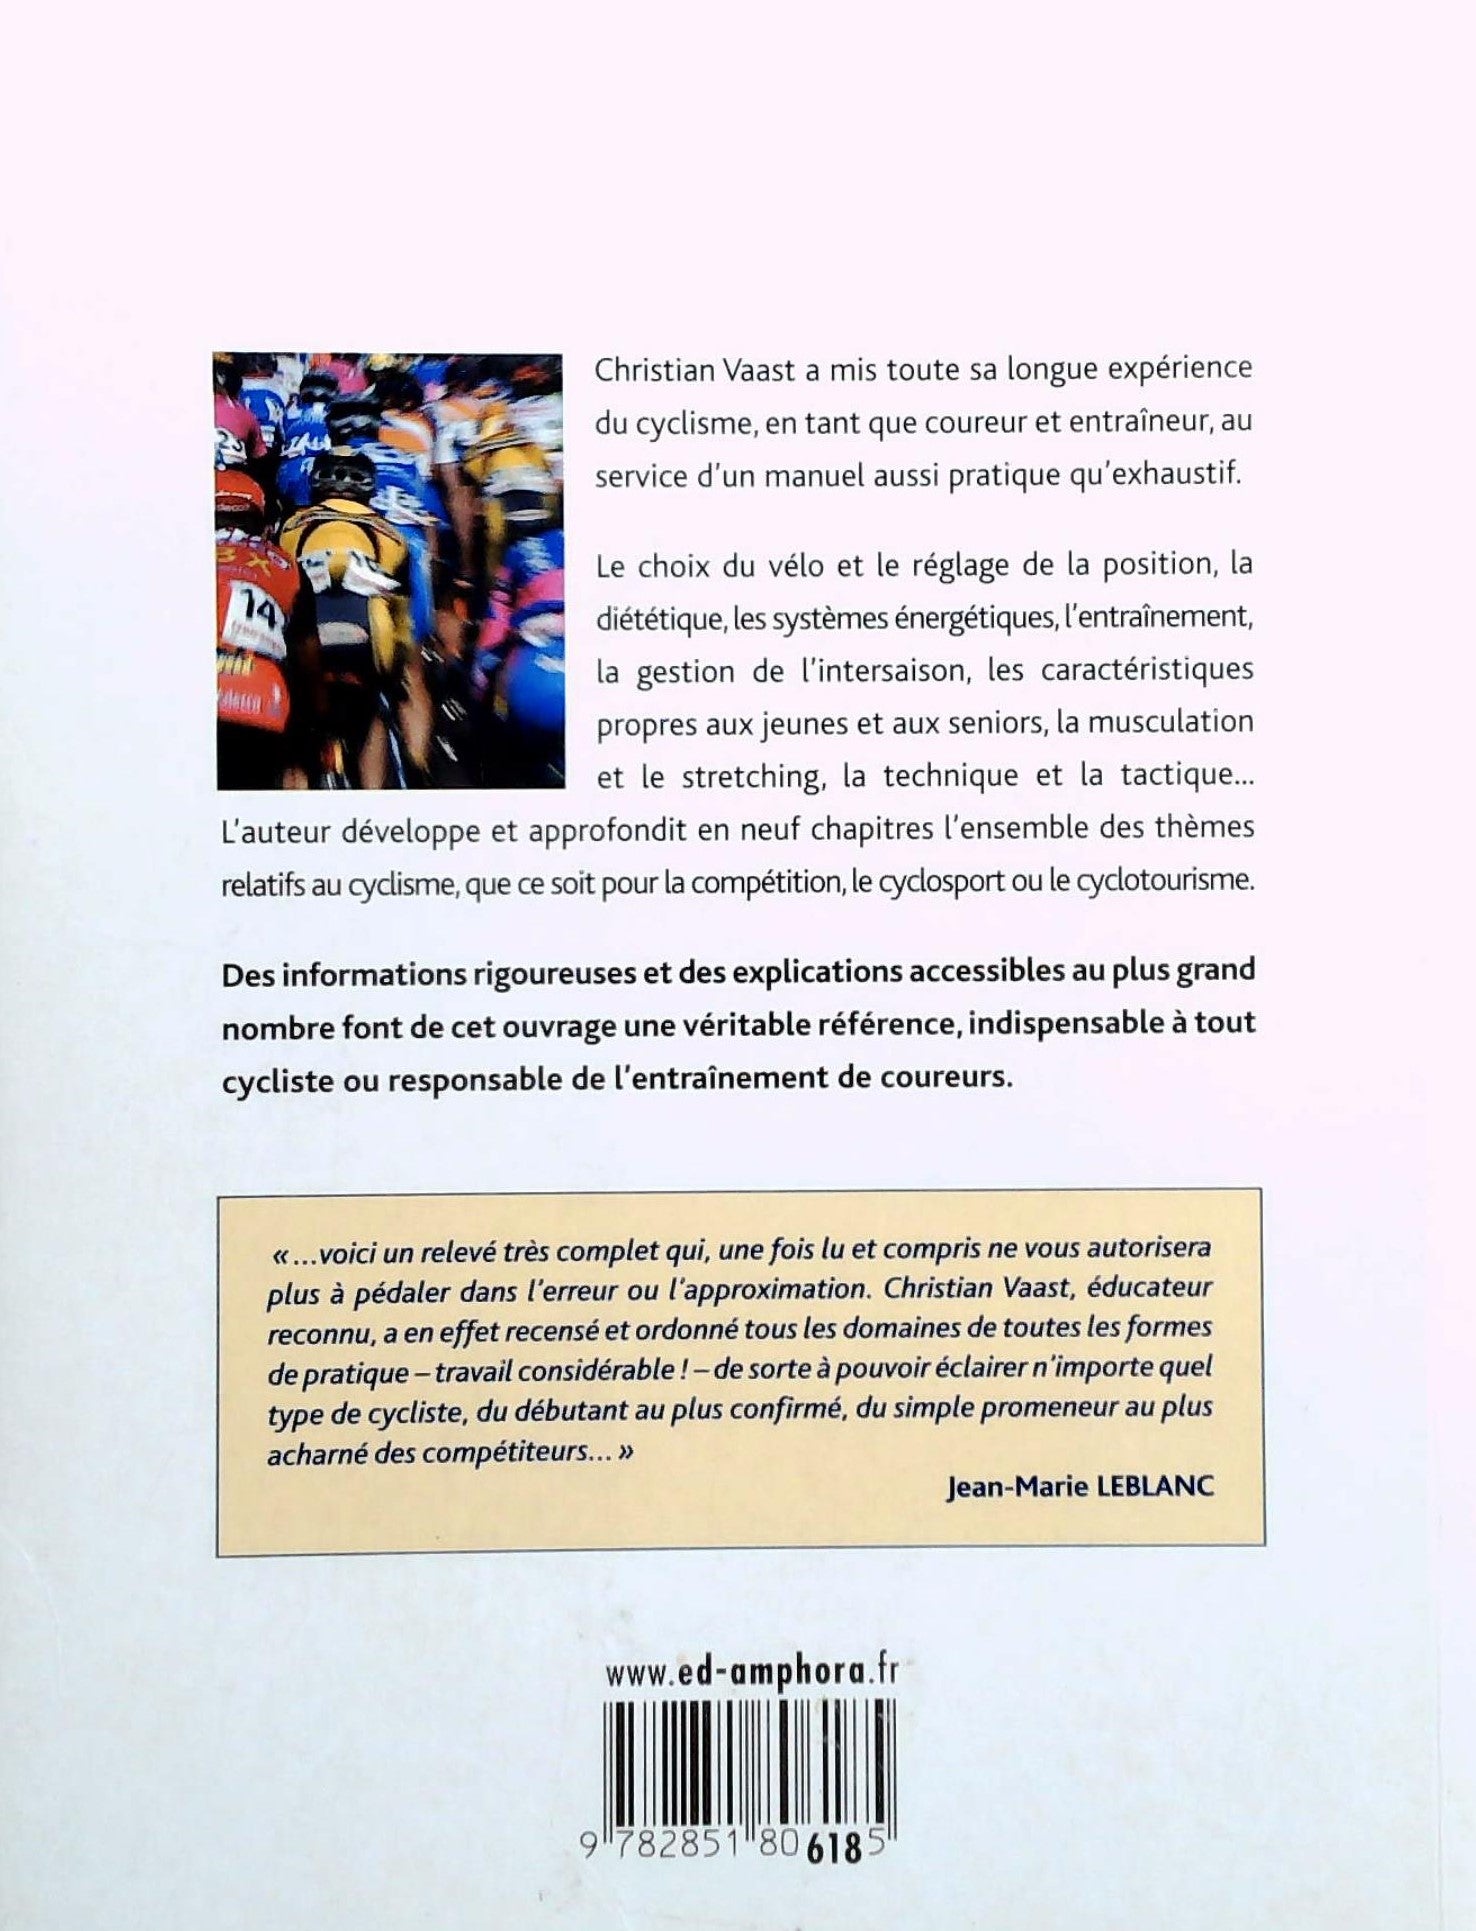 Les fondamentaux du cyclisme : Compétition, cyclosport, cyclotourisme (Christian Caast)